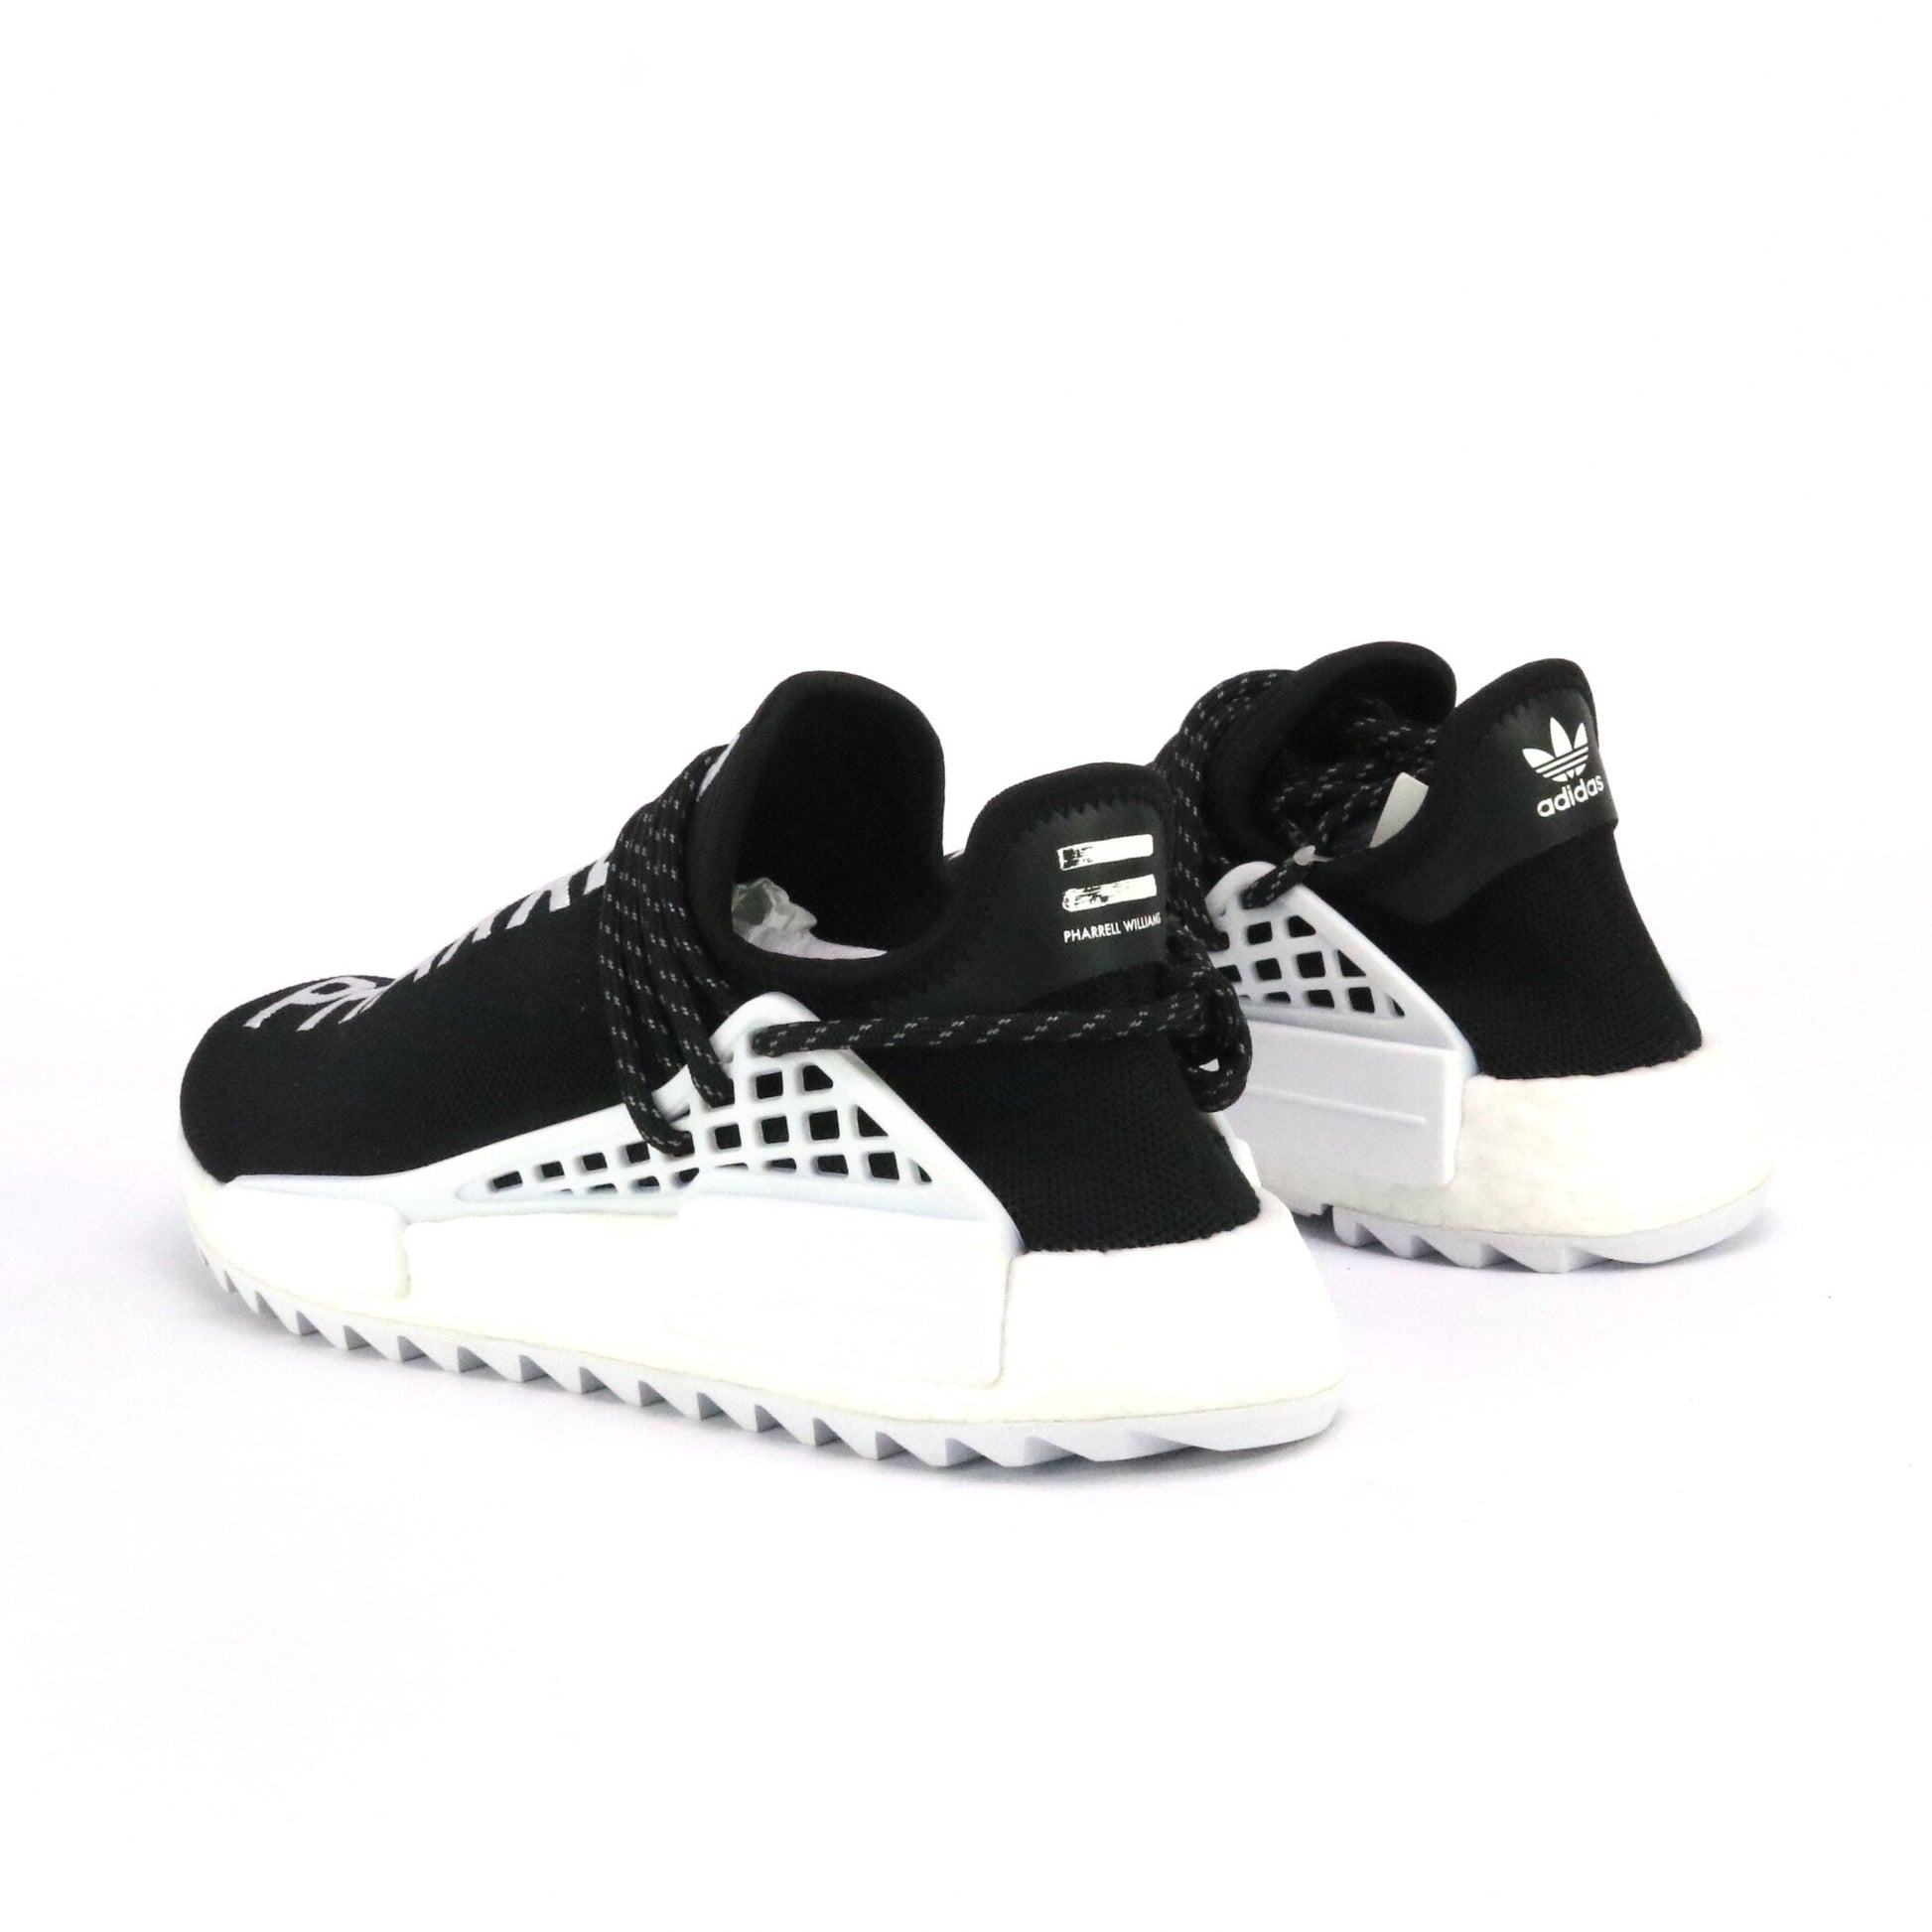 Adidas x Pharrell Williams CC Hu NMD Chanel Sneakers - Farfetch